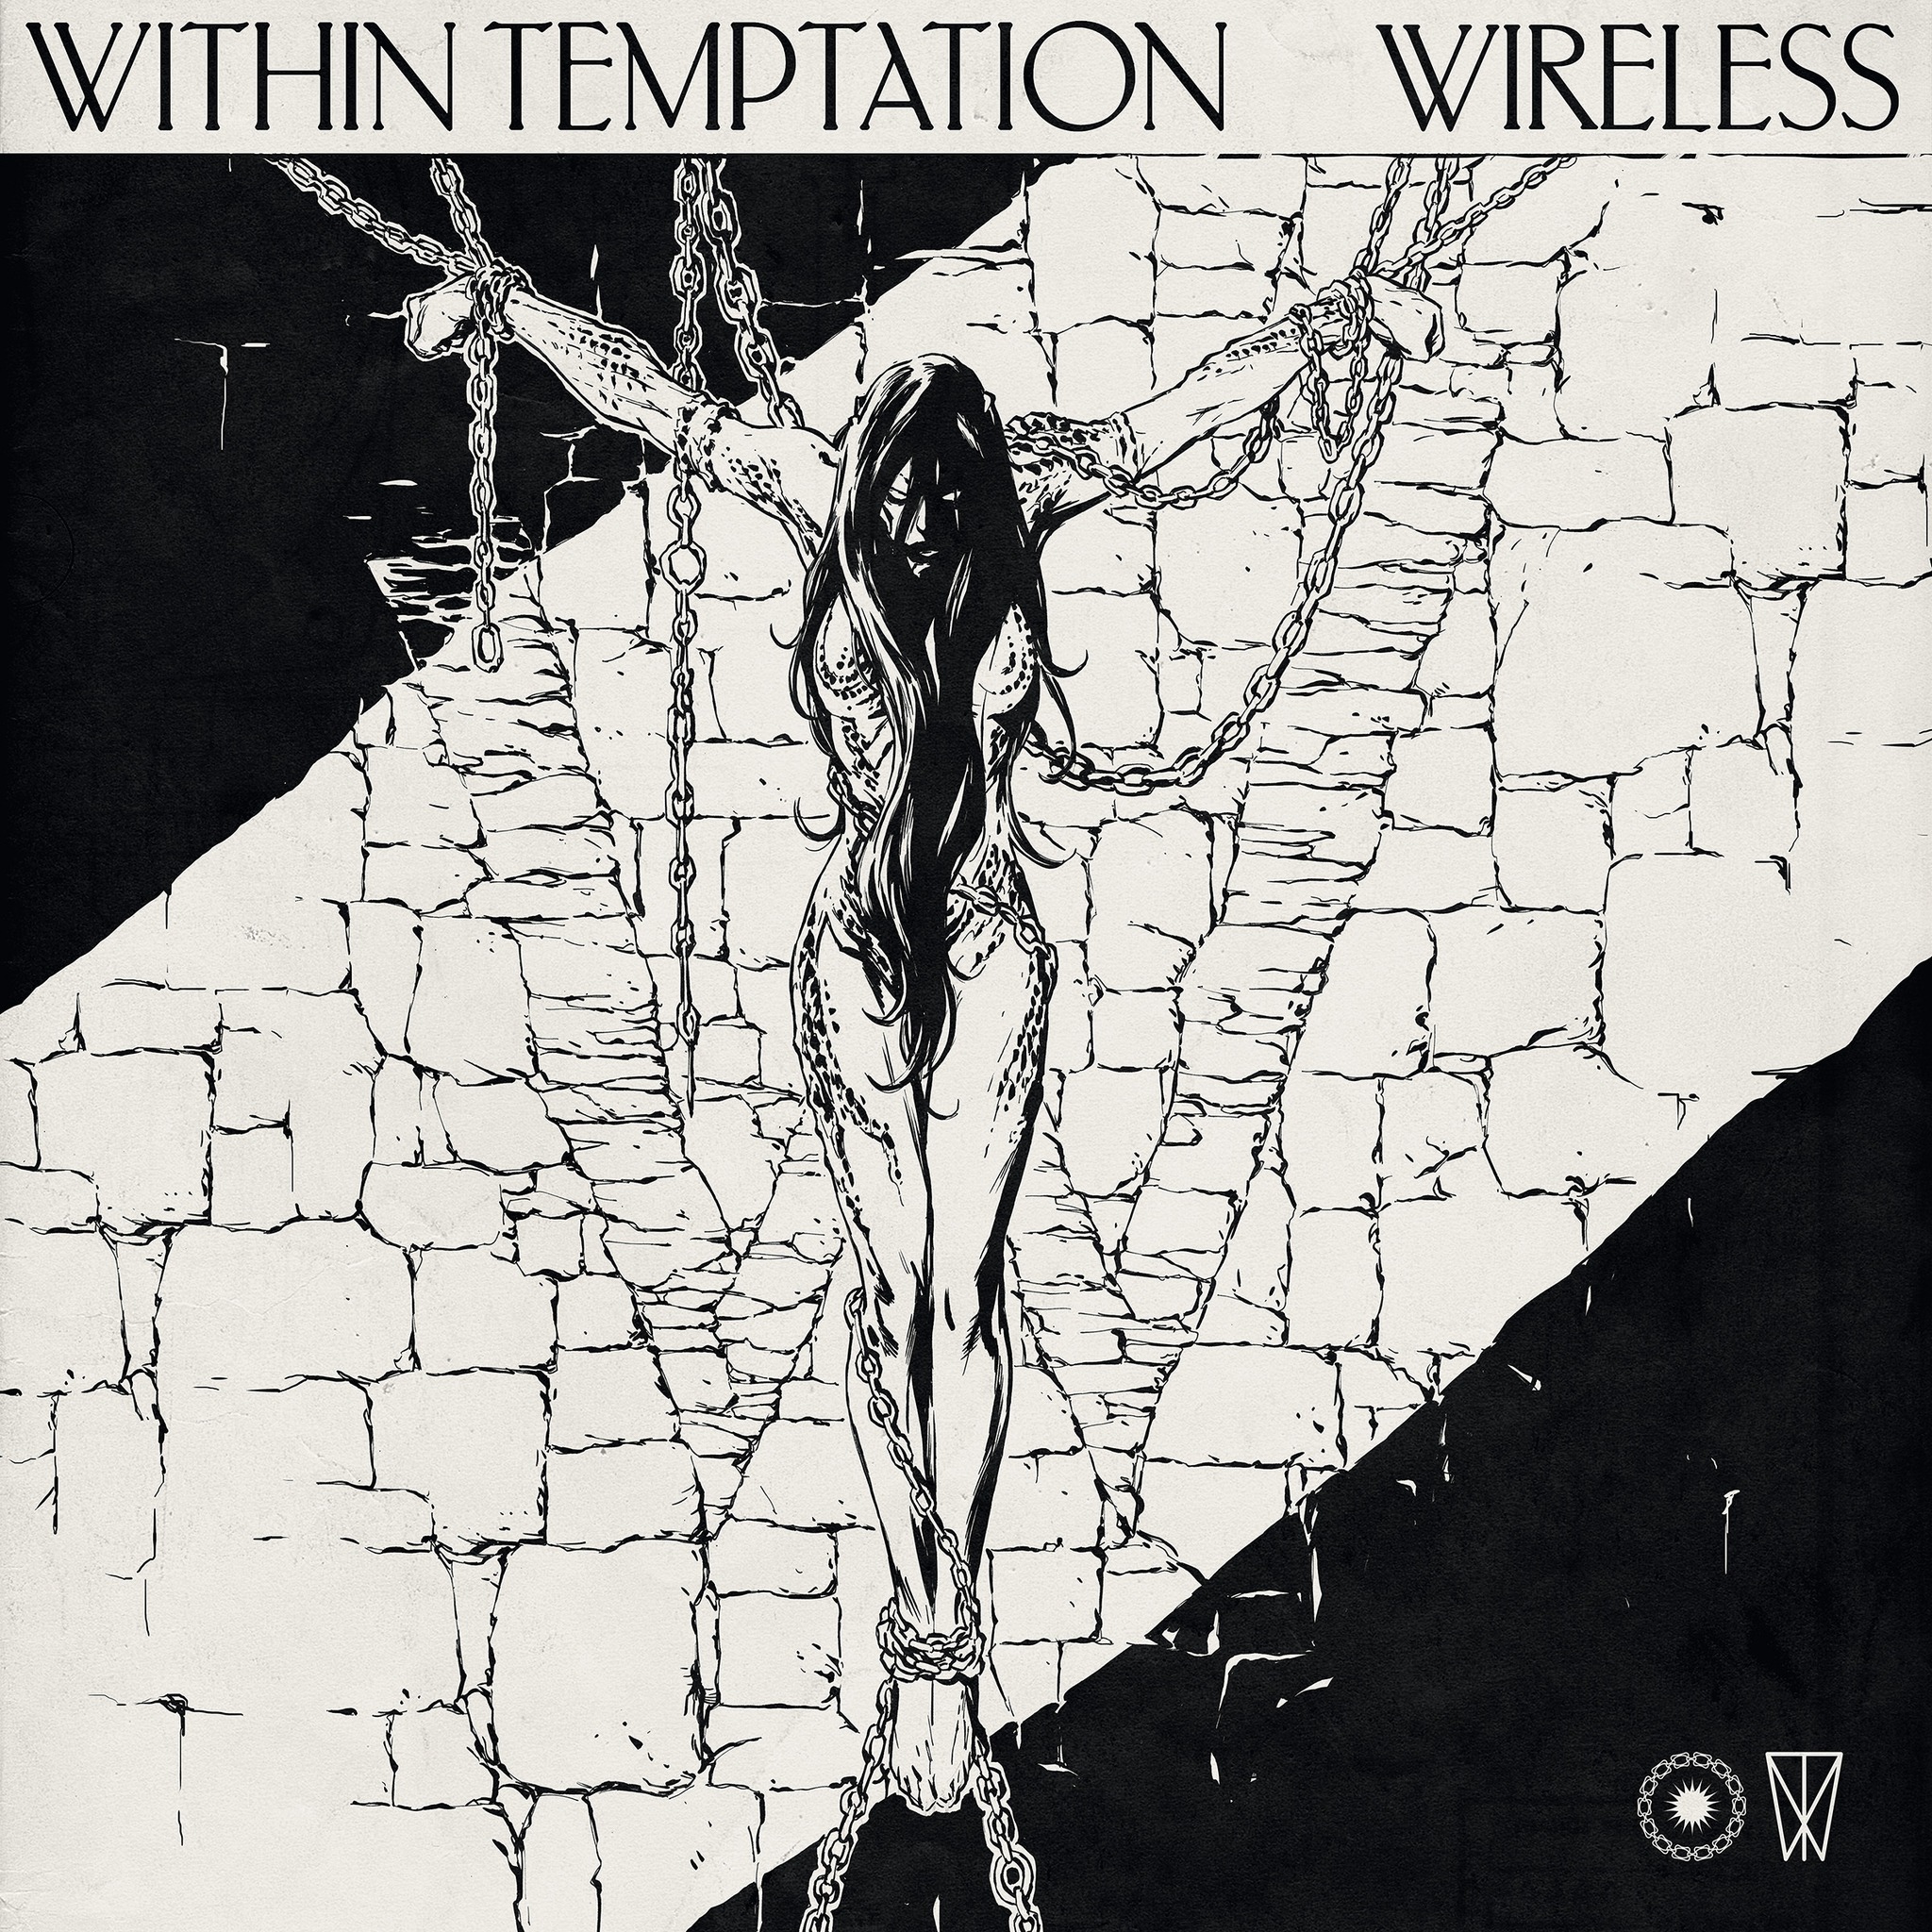 within temptation wireless